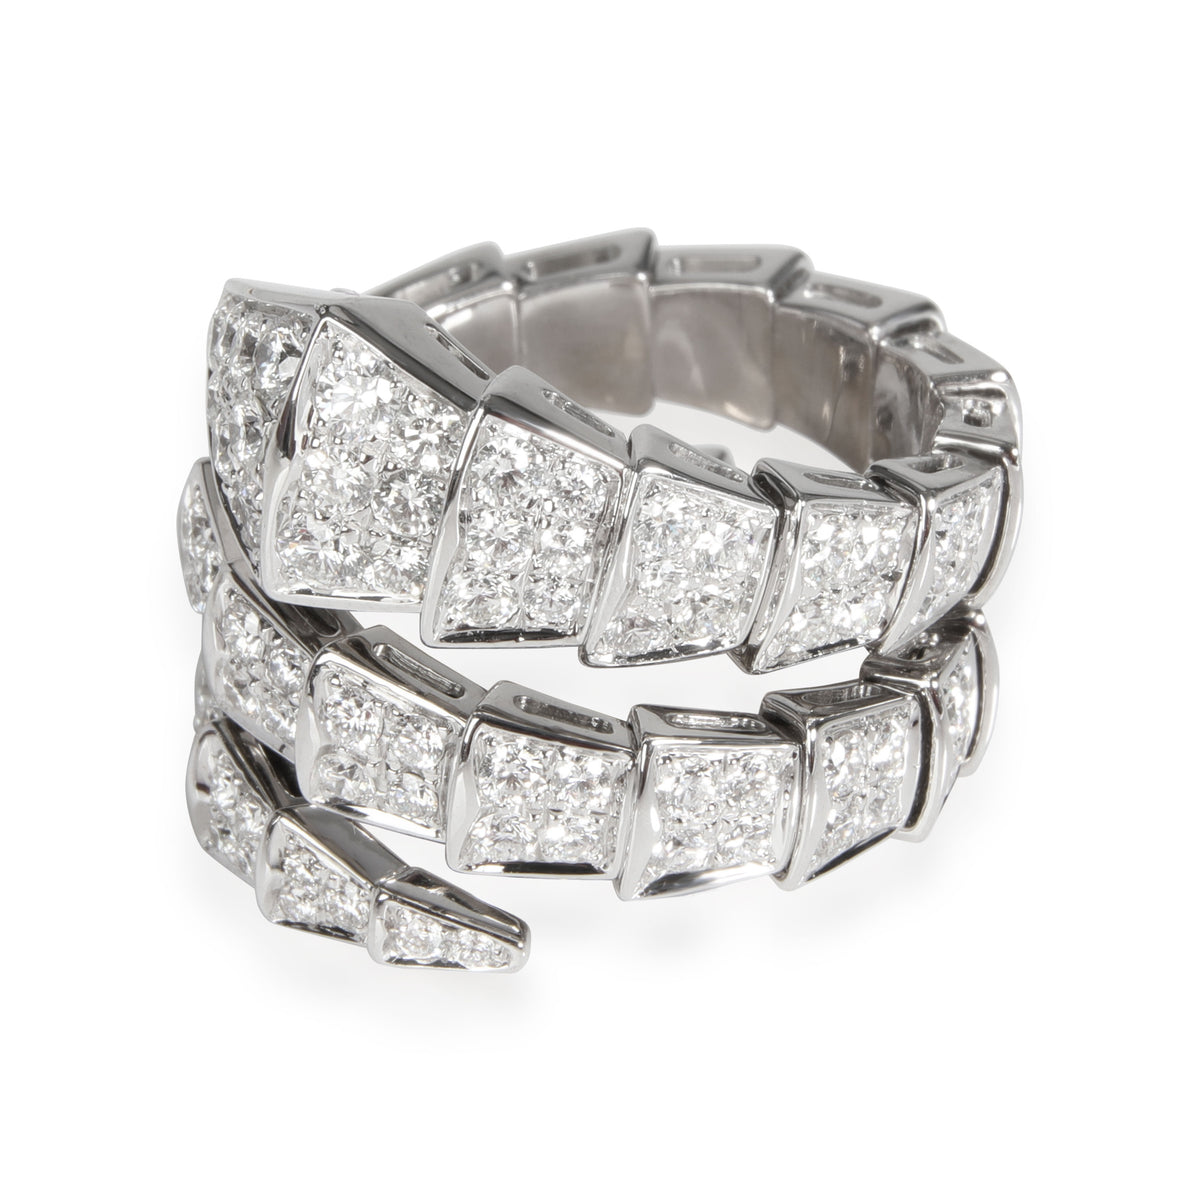 BVLGARI Serpenti Diamond Ring in 18K White Gold 2.77 CTW